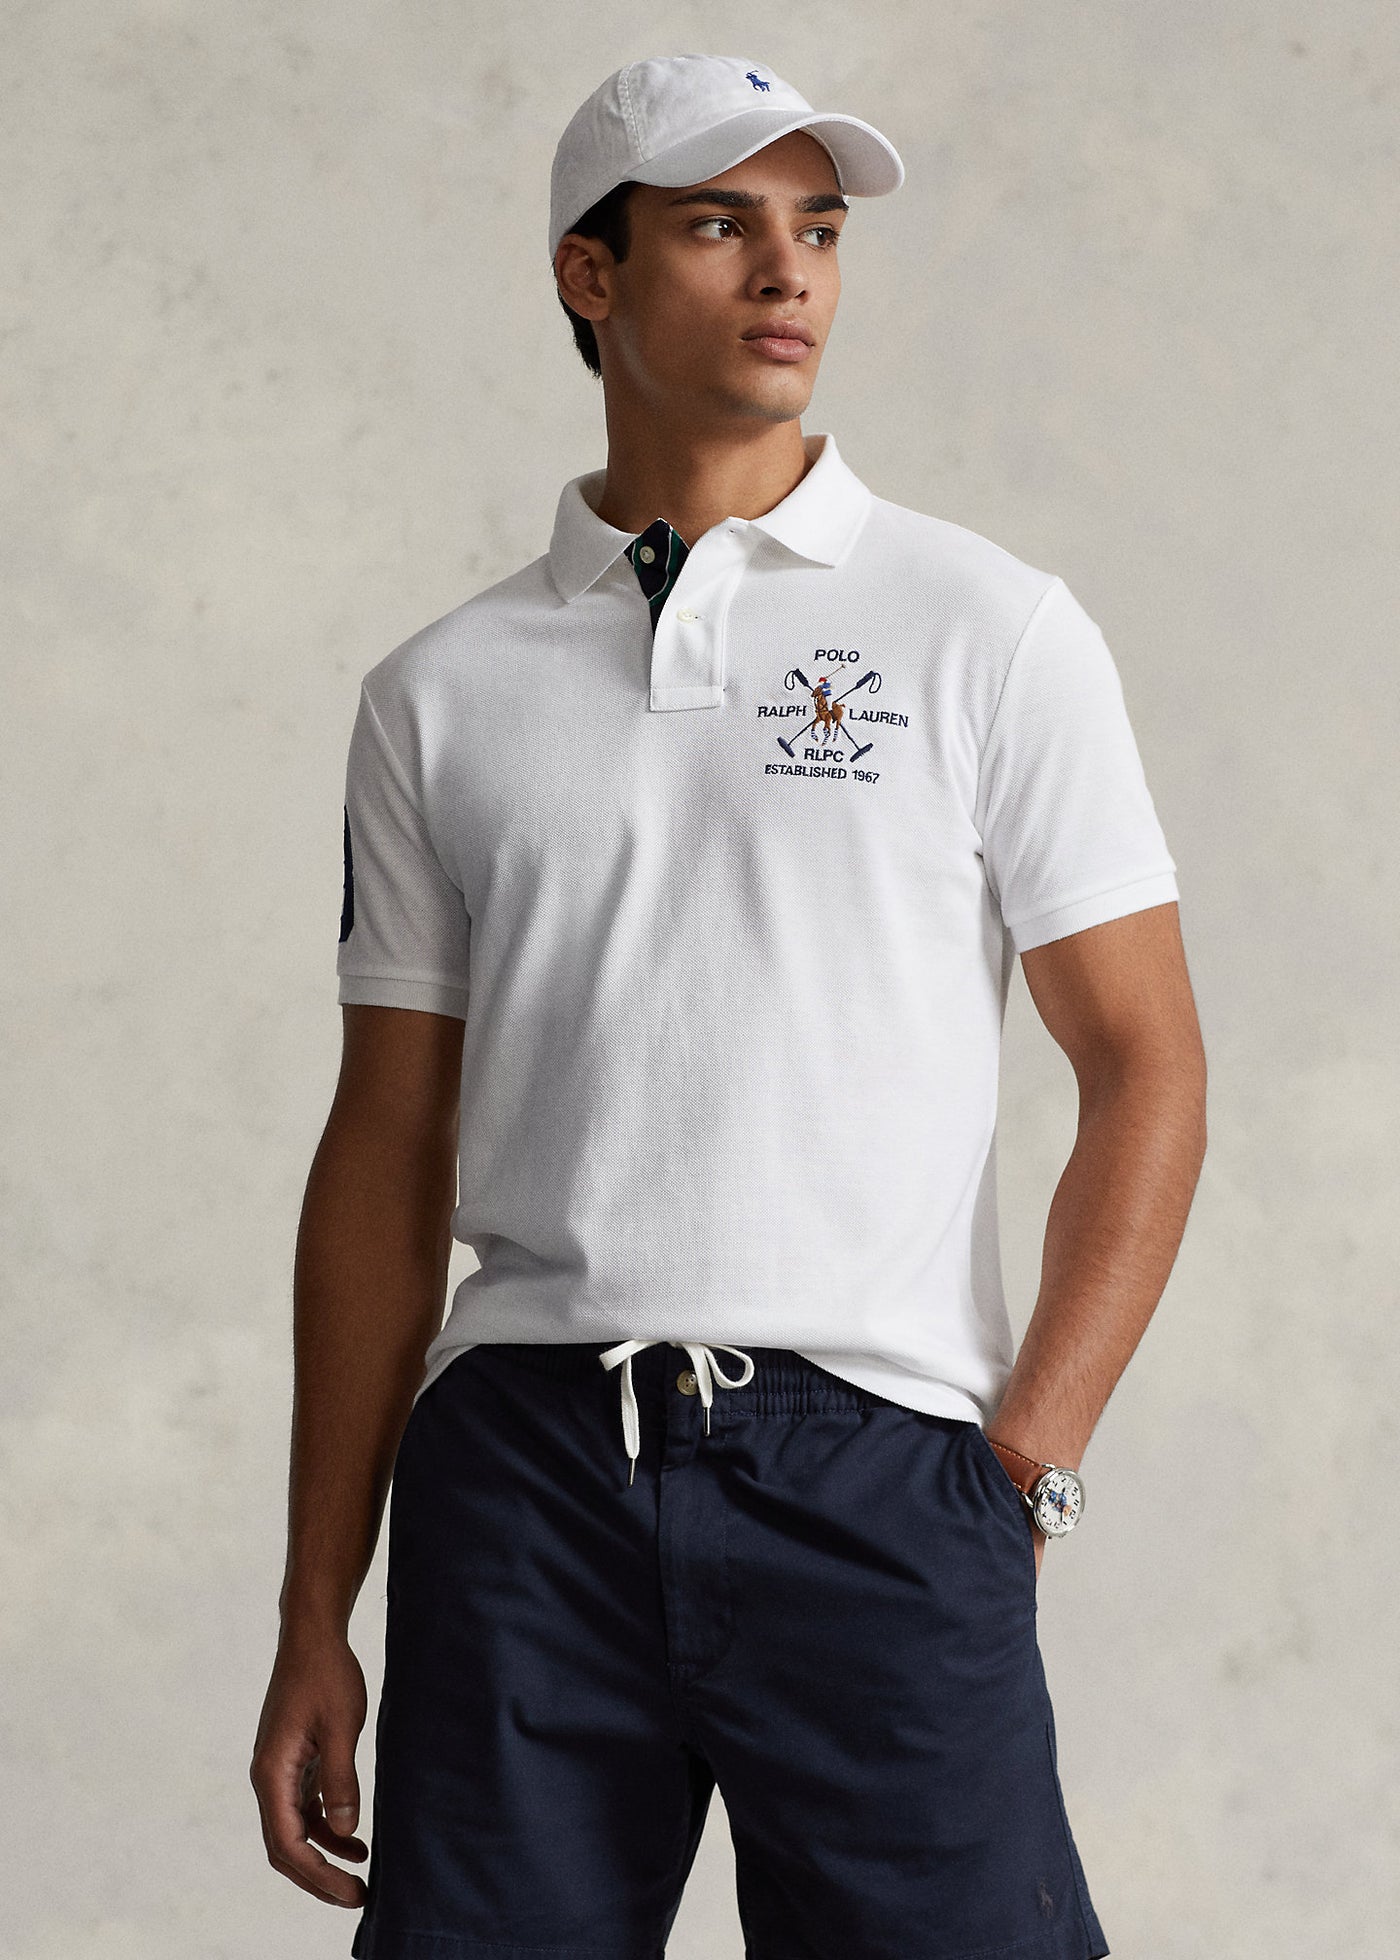 Ralph Lauren Custom Slim Fit Mesh Polo Shirt | White